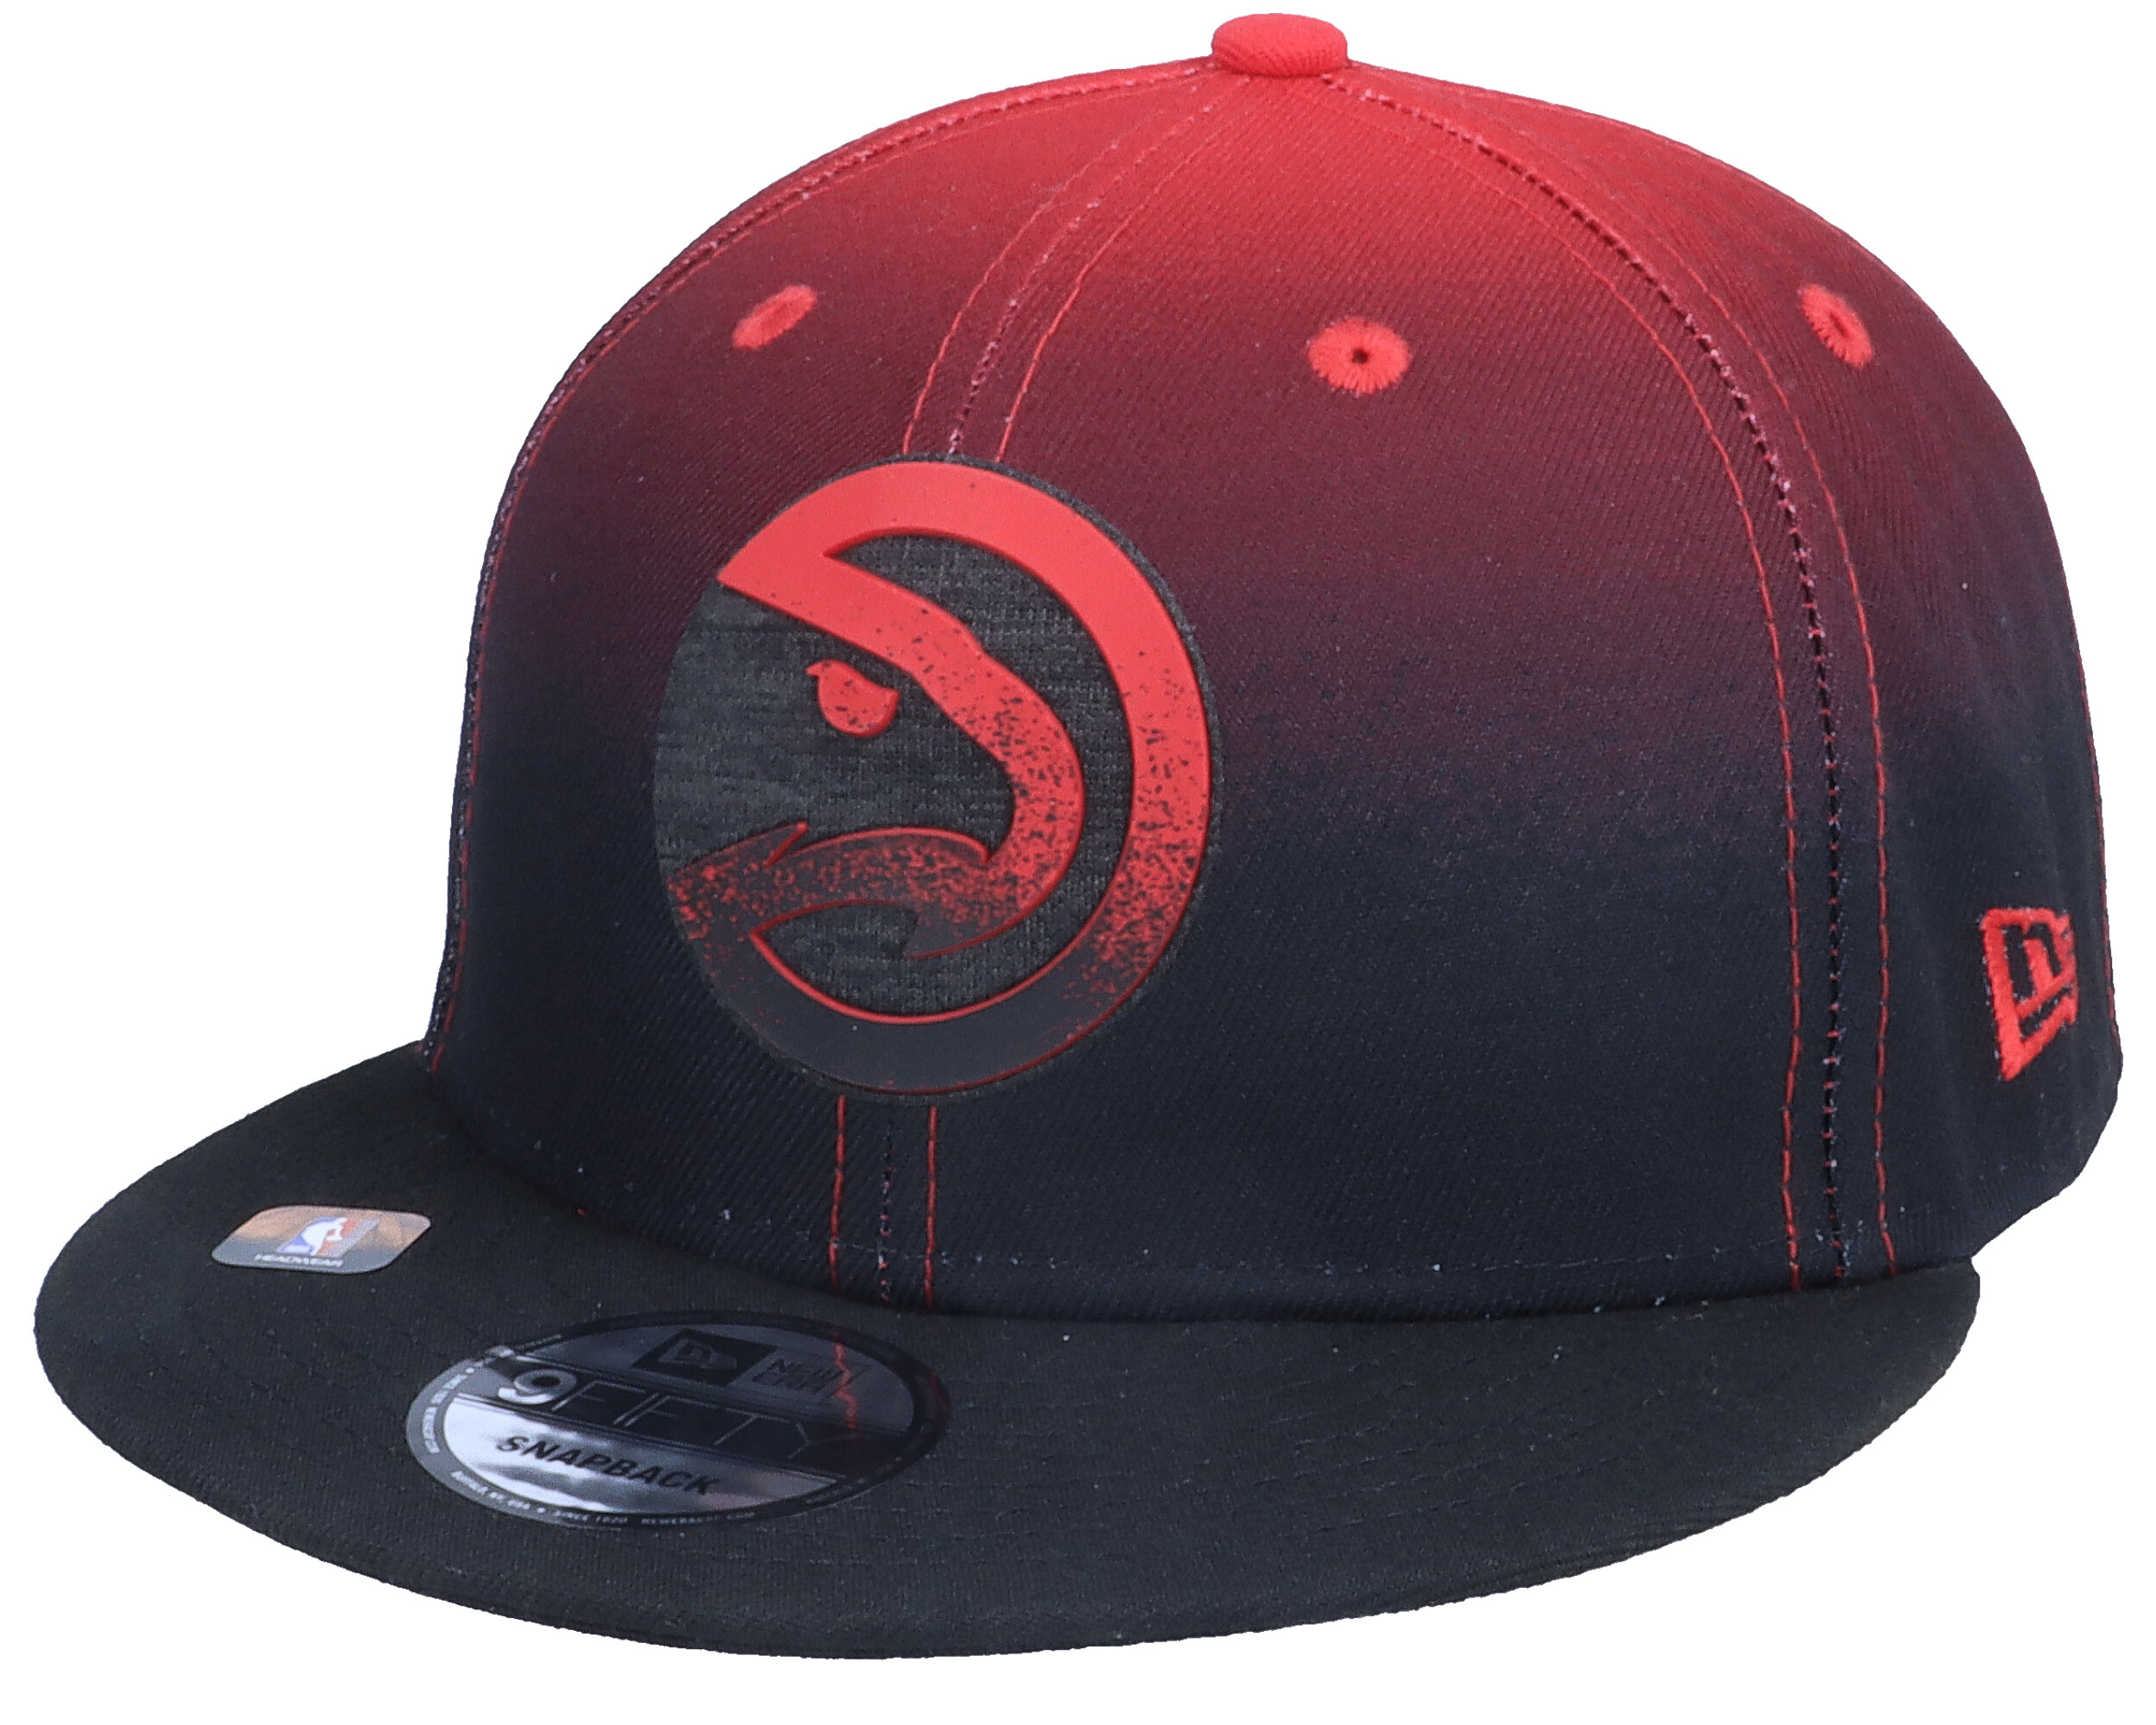 Atlanta Hawks Draft Grey 9FIFTY Snapback Hat – New Era Cap Australia